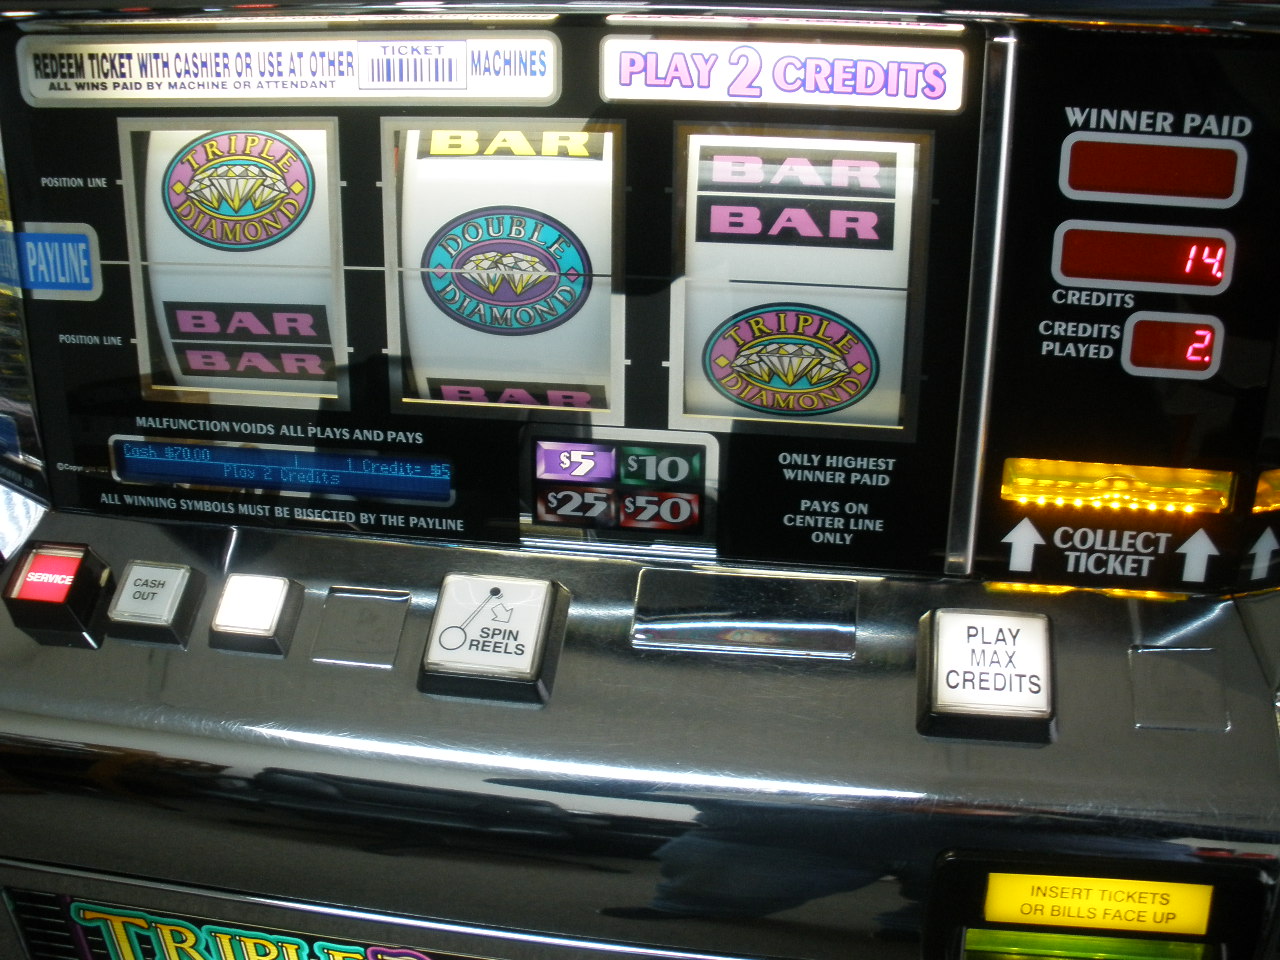 triple double diamond slot machine free